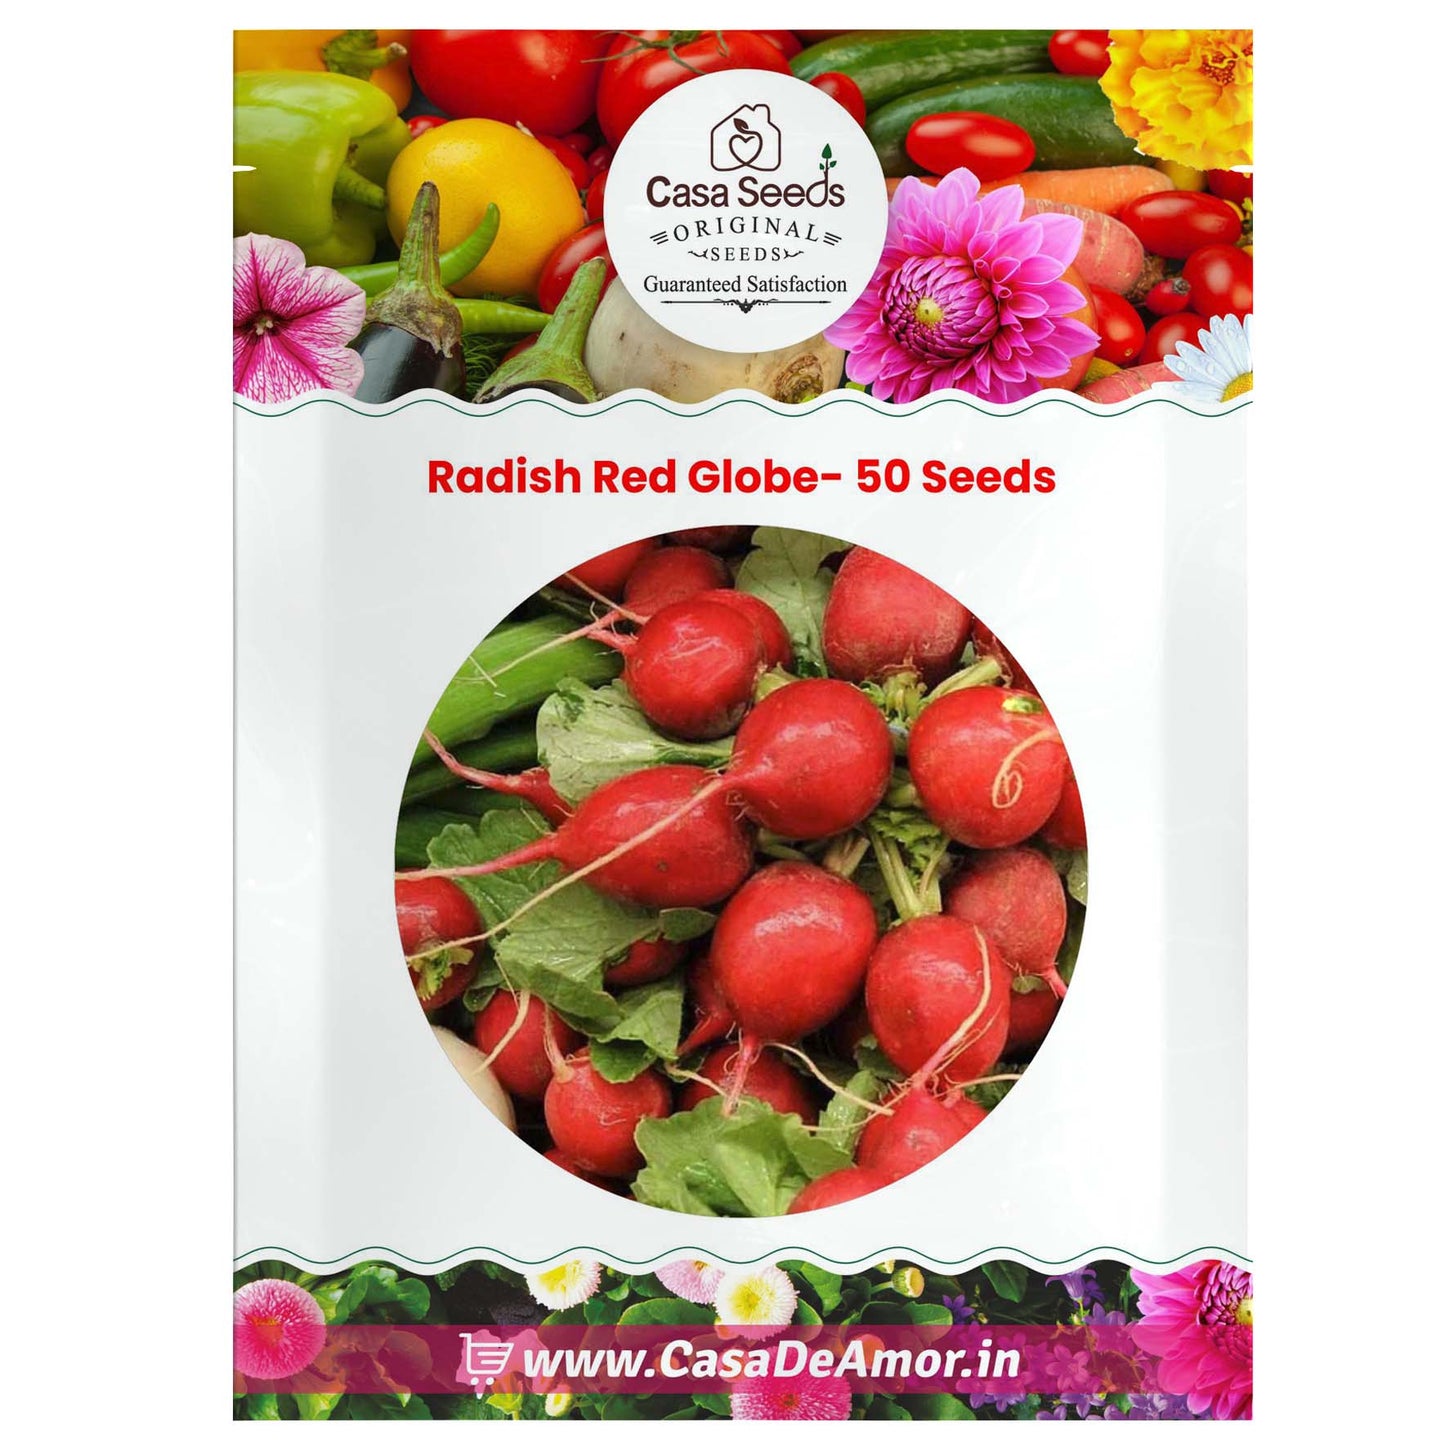 Radish Red Globe- 50 Seeds